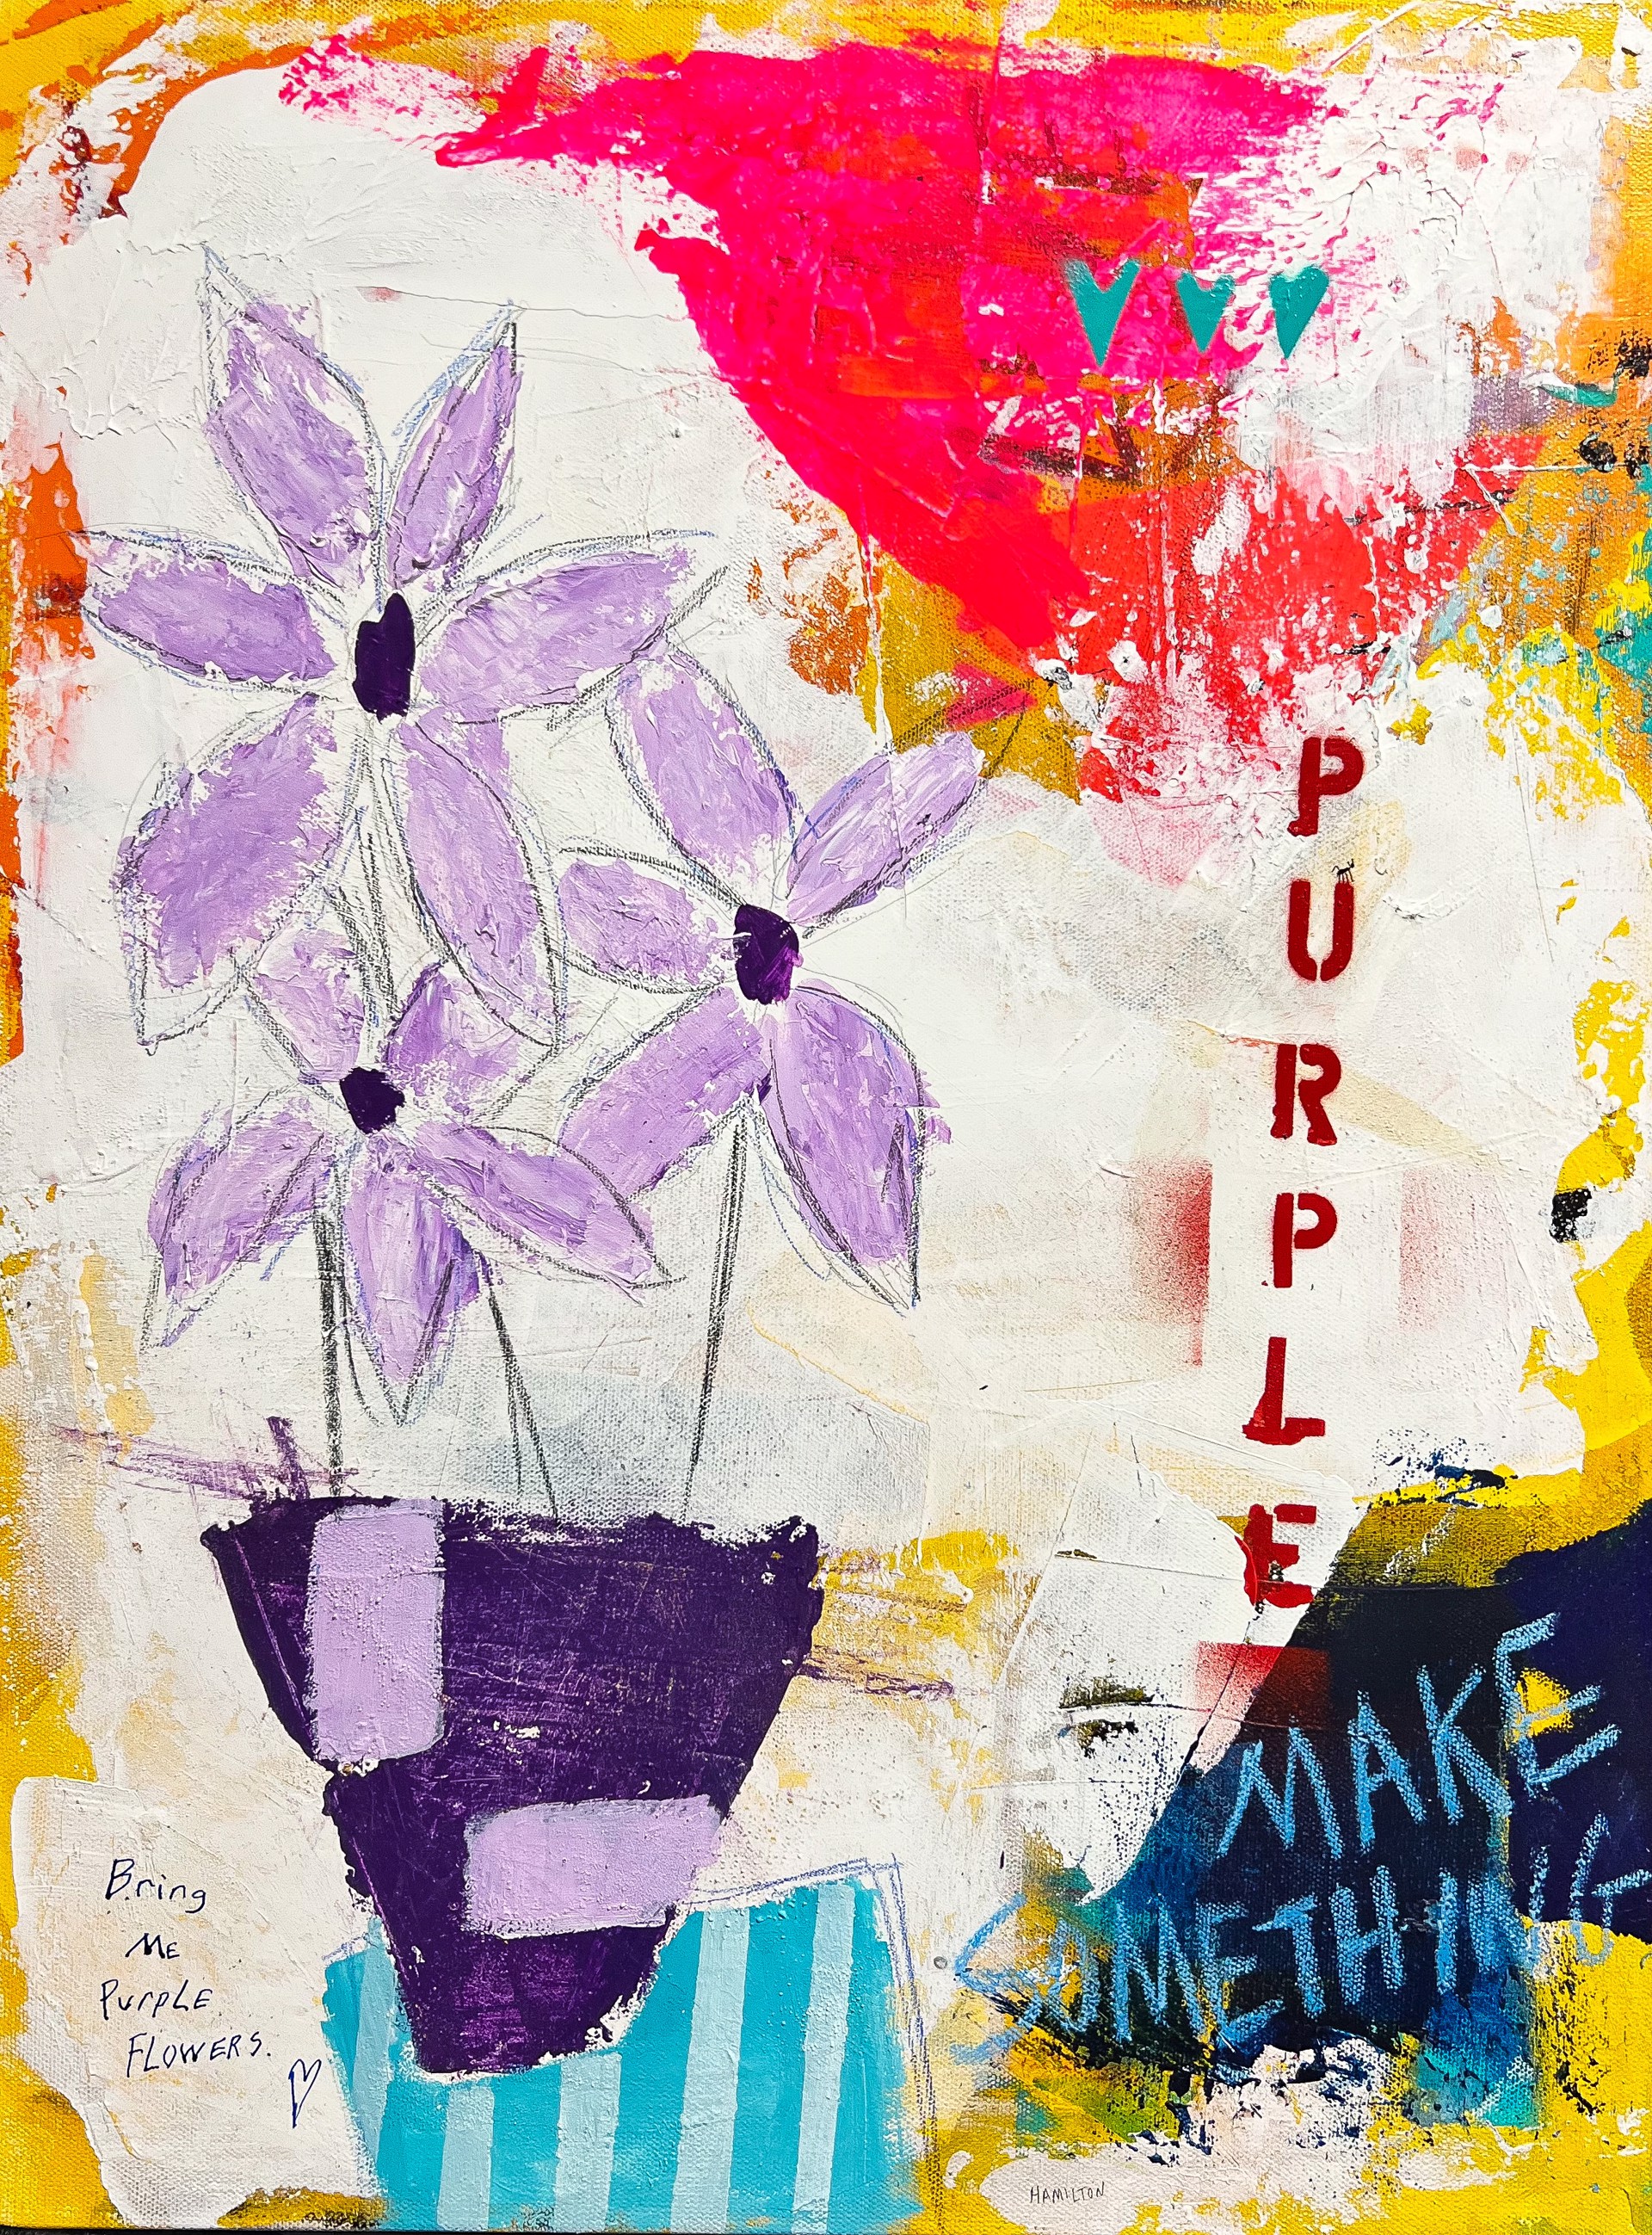 Bring me Purple Flowers by Rick Hamilton